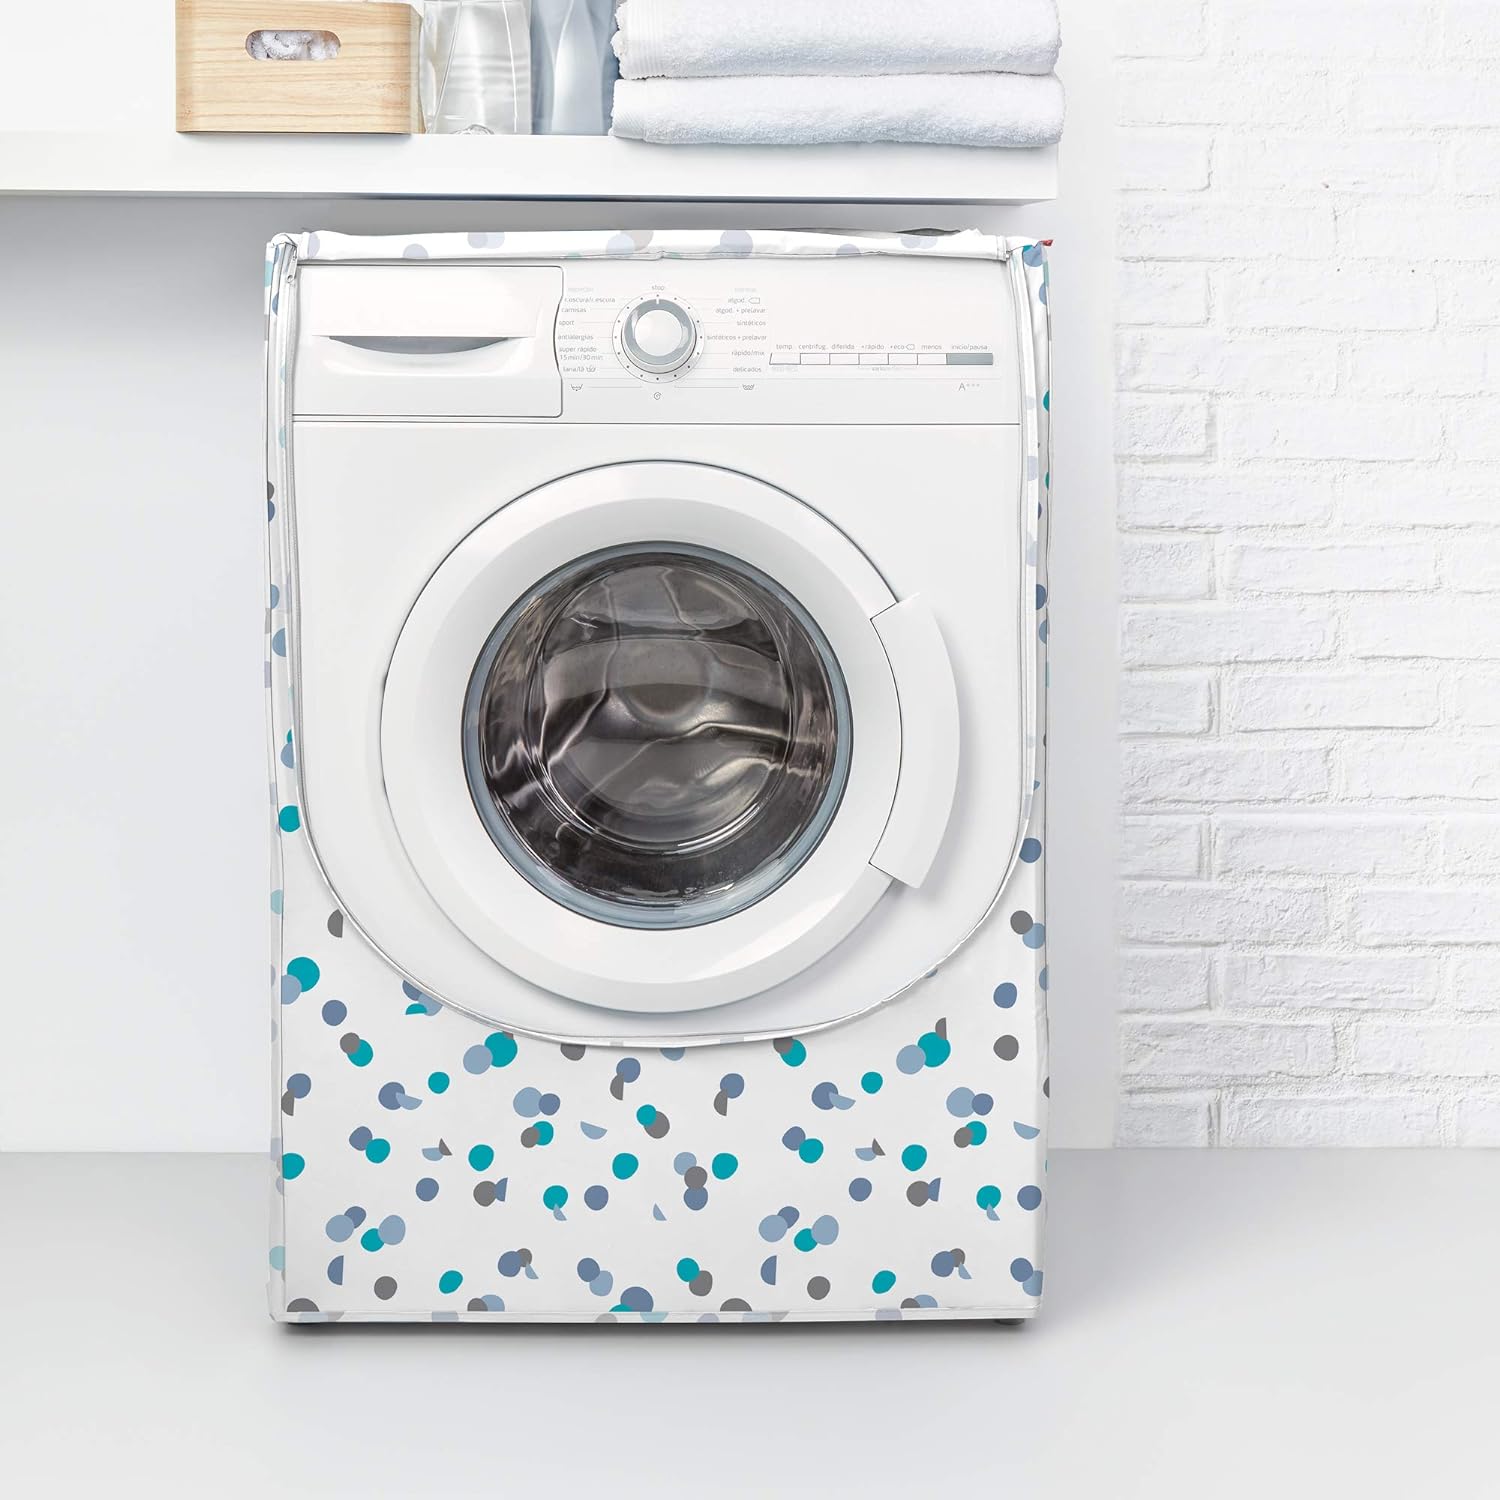 Rayen | Medium Washer Machine case | Front - Loading | Washer & Dryer | with Zipper | 84 x 60 x 60 cm | White - Blue - Amazing Gadgets Outlet